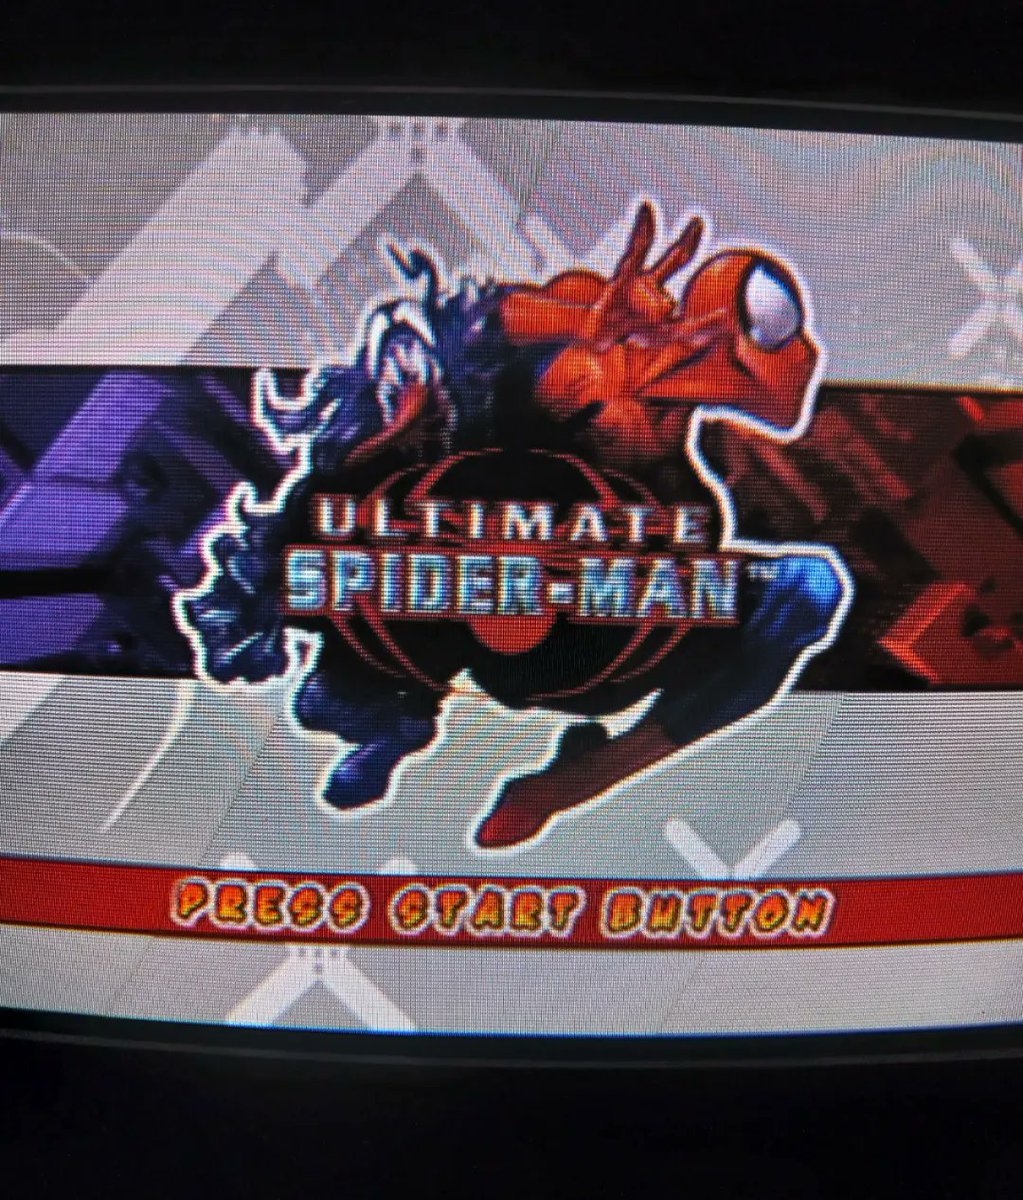 🔴Ultimate Spider-man PS2🟣
#Spiderman #venom #ultimatespiderman #ultimatespidermangame #ps2game #videogamecollection